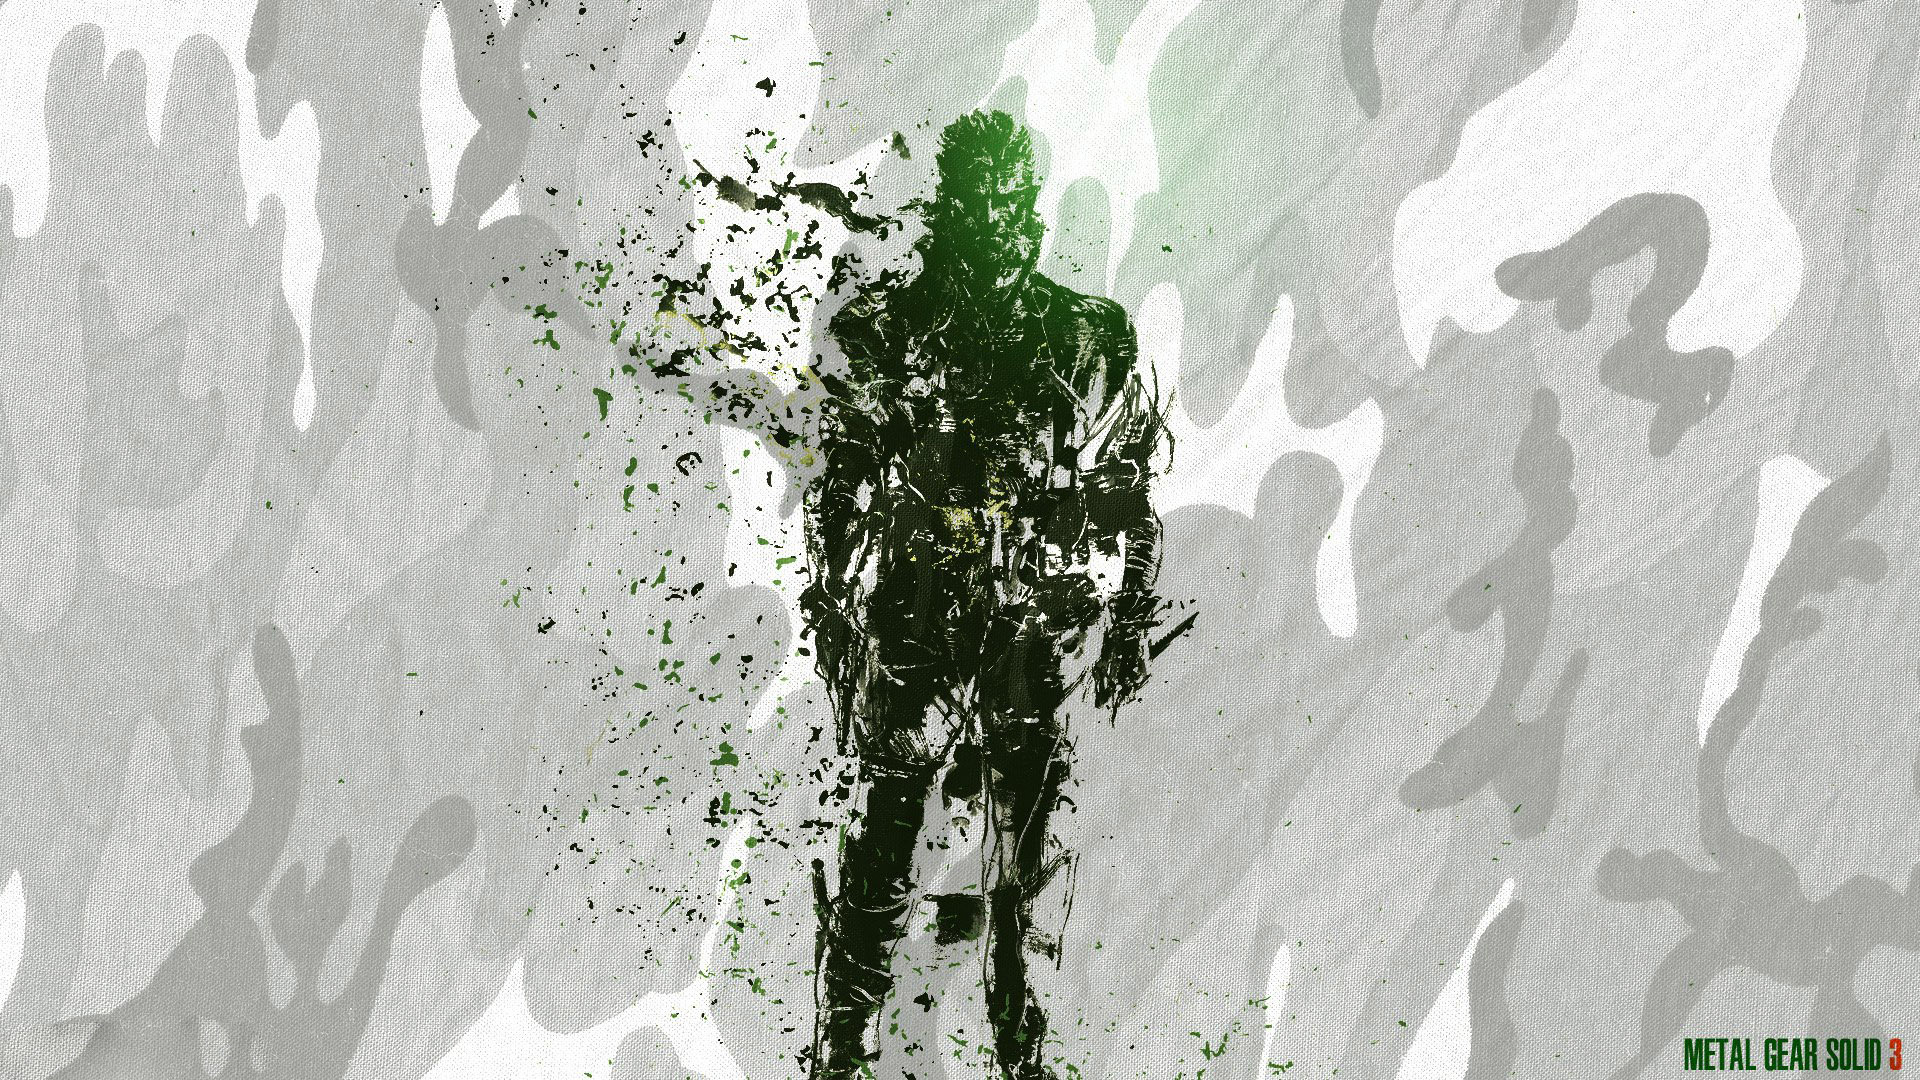 Metal Gear Solid, Big Boss, Metal Gear Solid - Snake Metal Gear Solid 3  Wallpaper Hd - 1920x1080 Wallpaper 